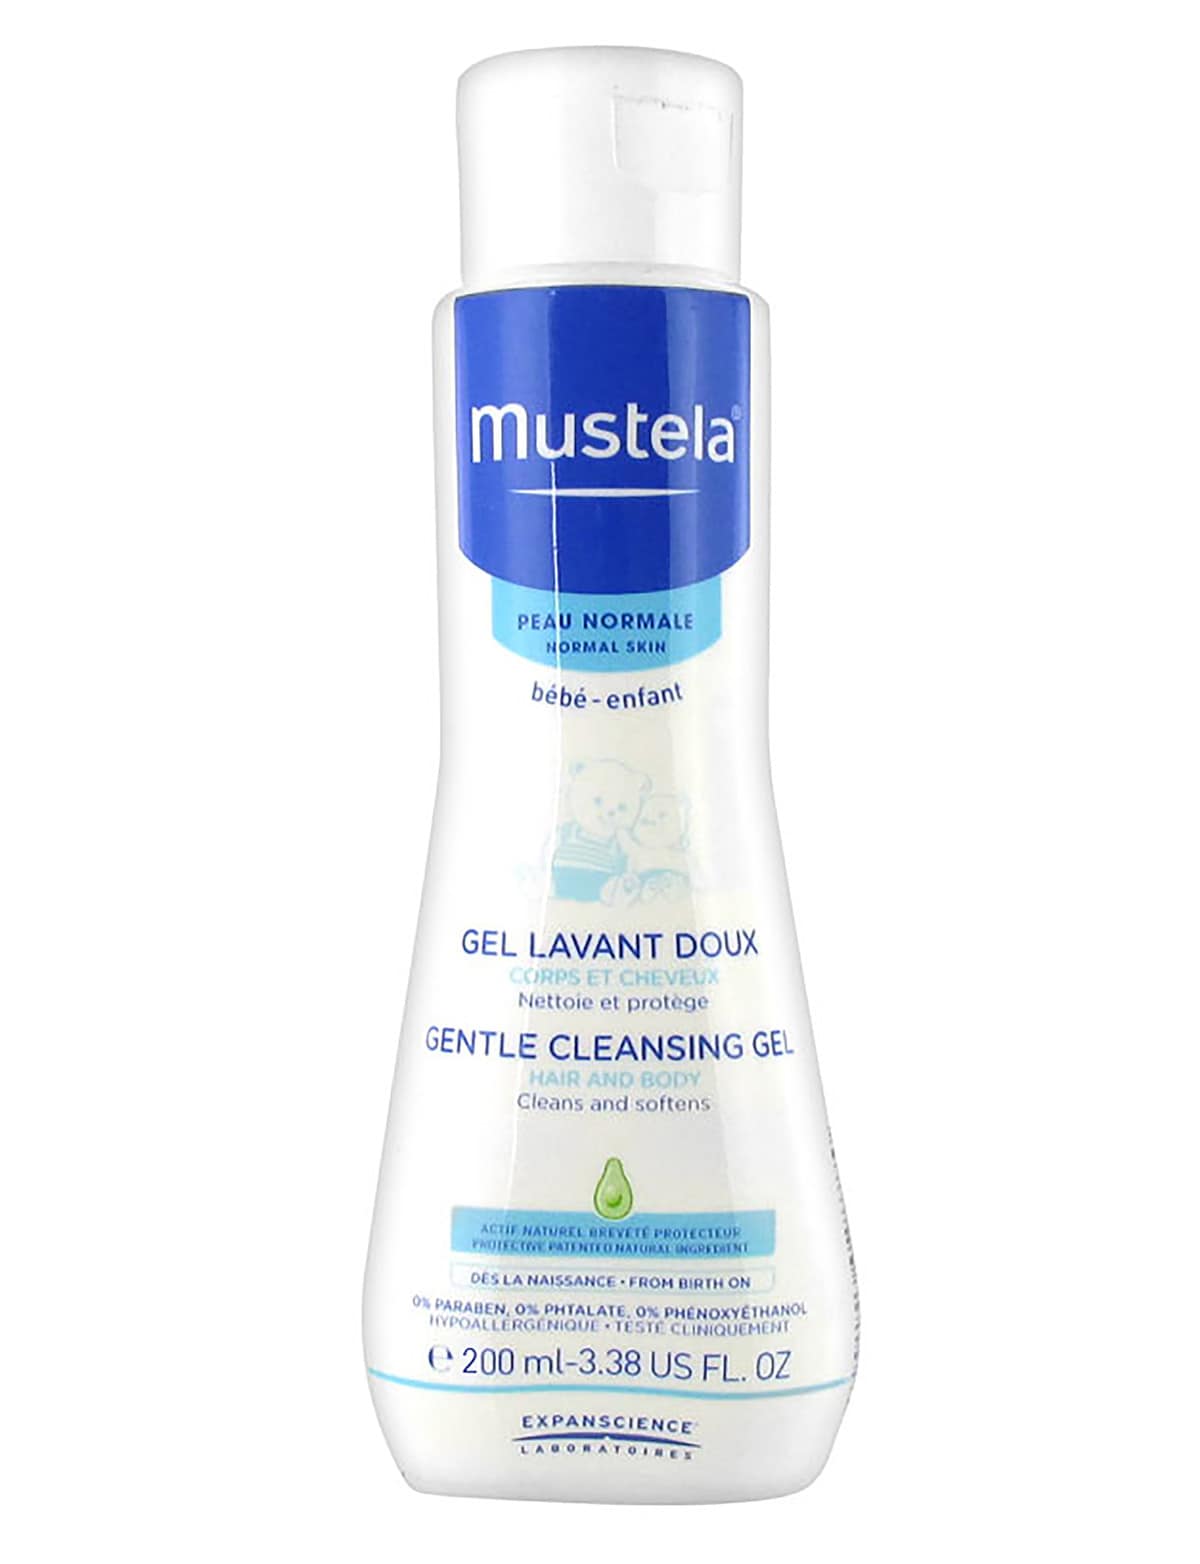 Mustela gentle cleansing gel body and hair for baby 200ml